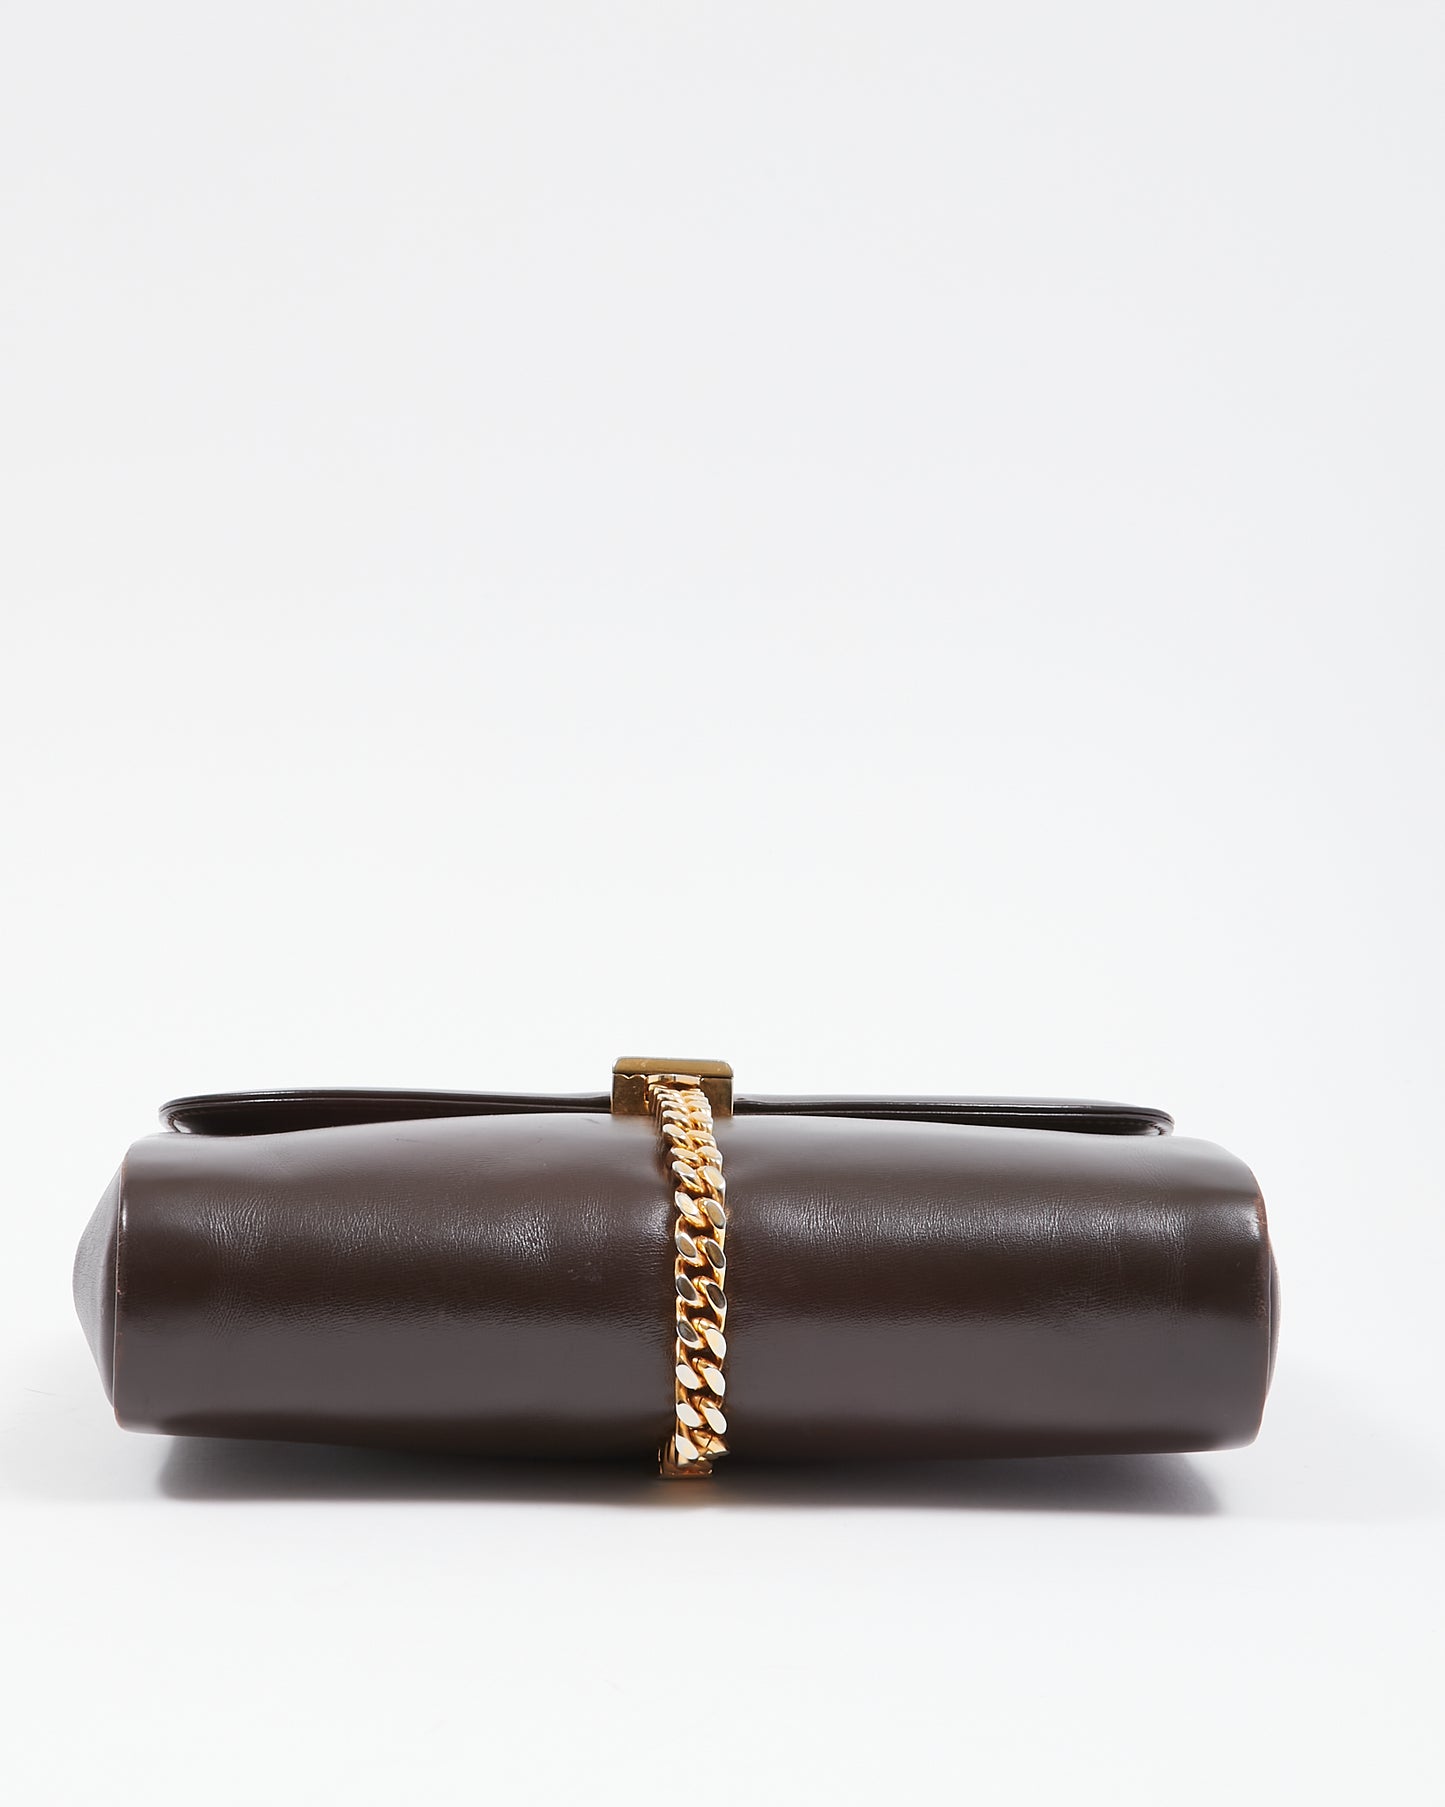 Gucci Vintage Brown Leather Gold Buckle Chain Shoulder Bag